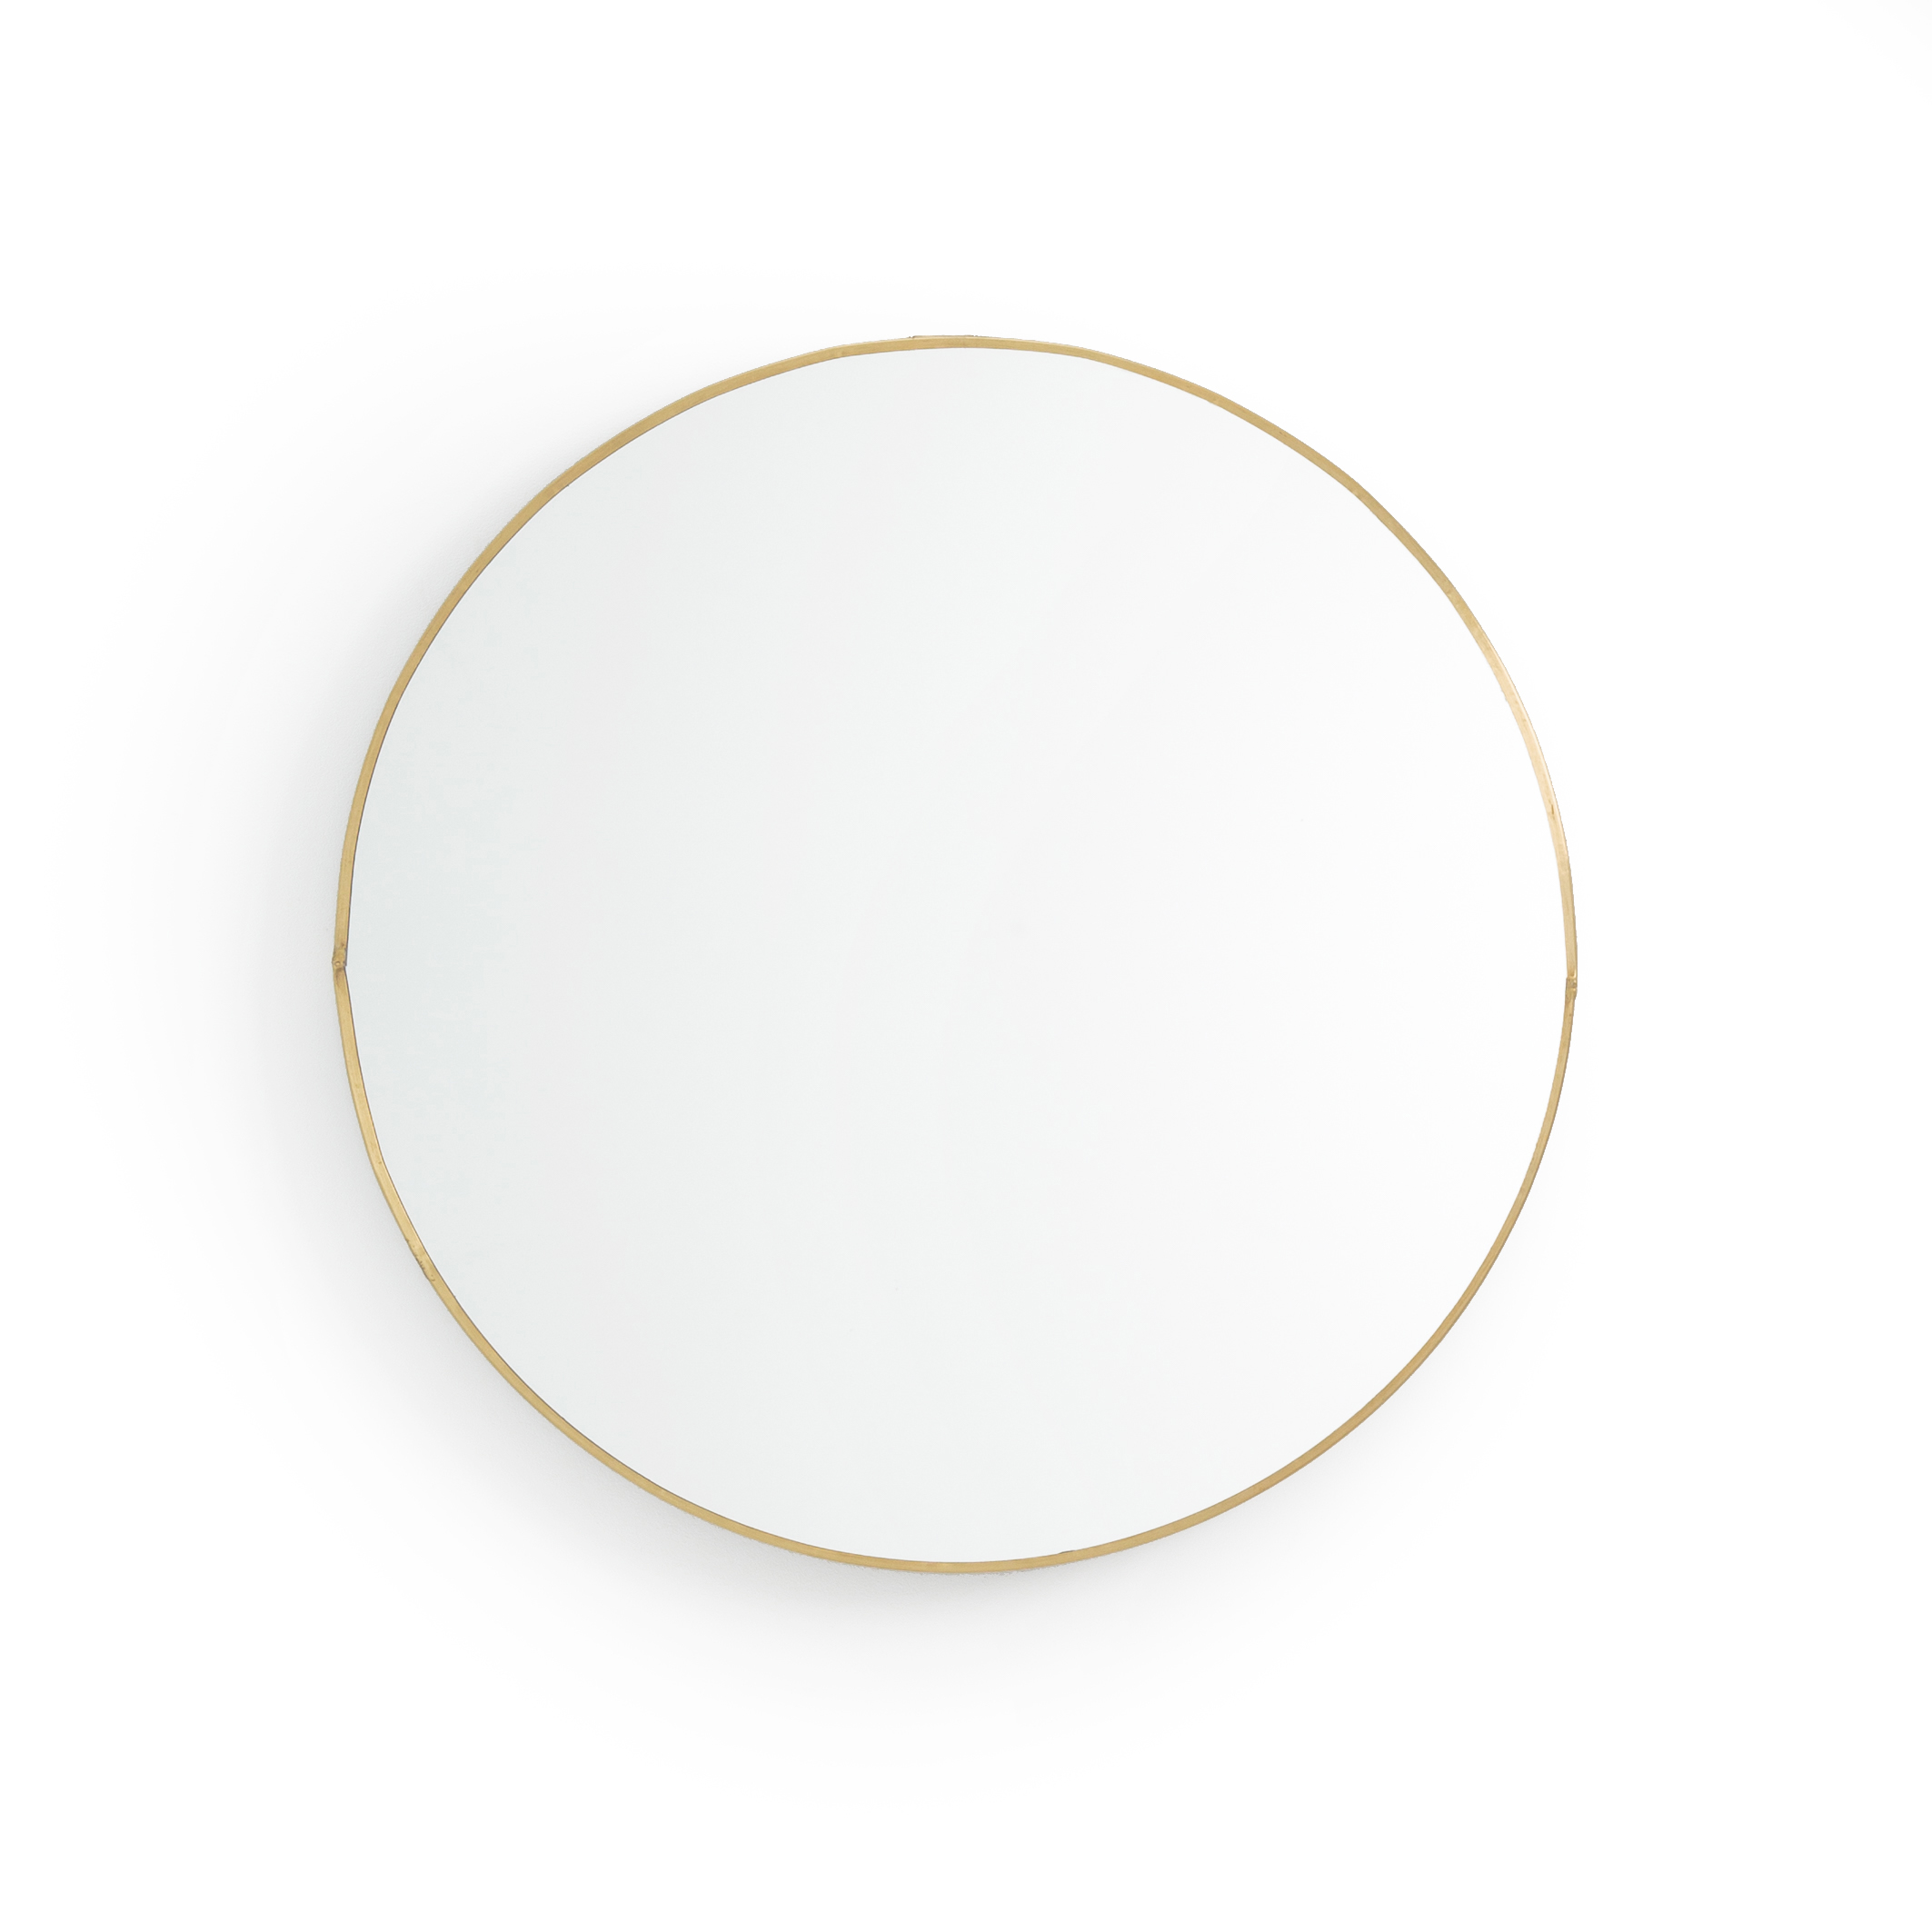 Uyova Round Mirror 38cm Diameter, Extra Large Round White Wall Mirror 120cm X 6